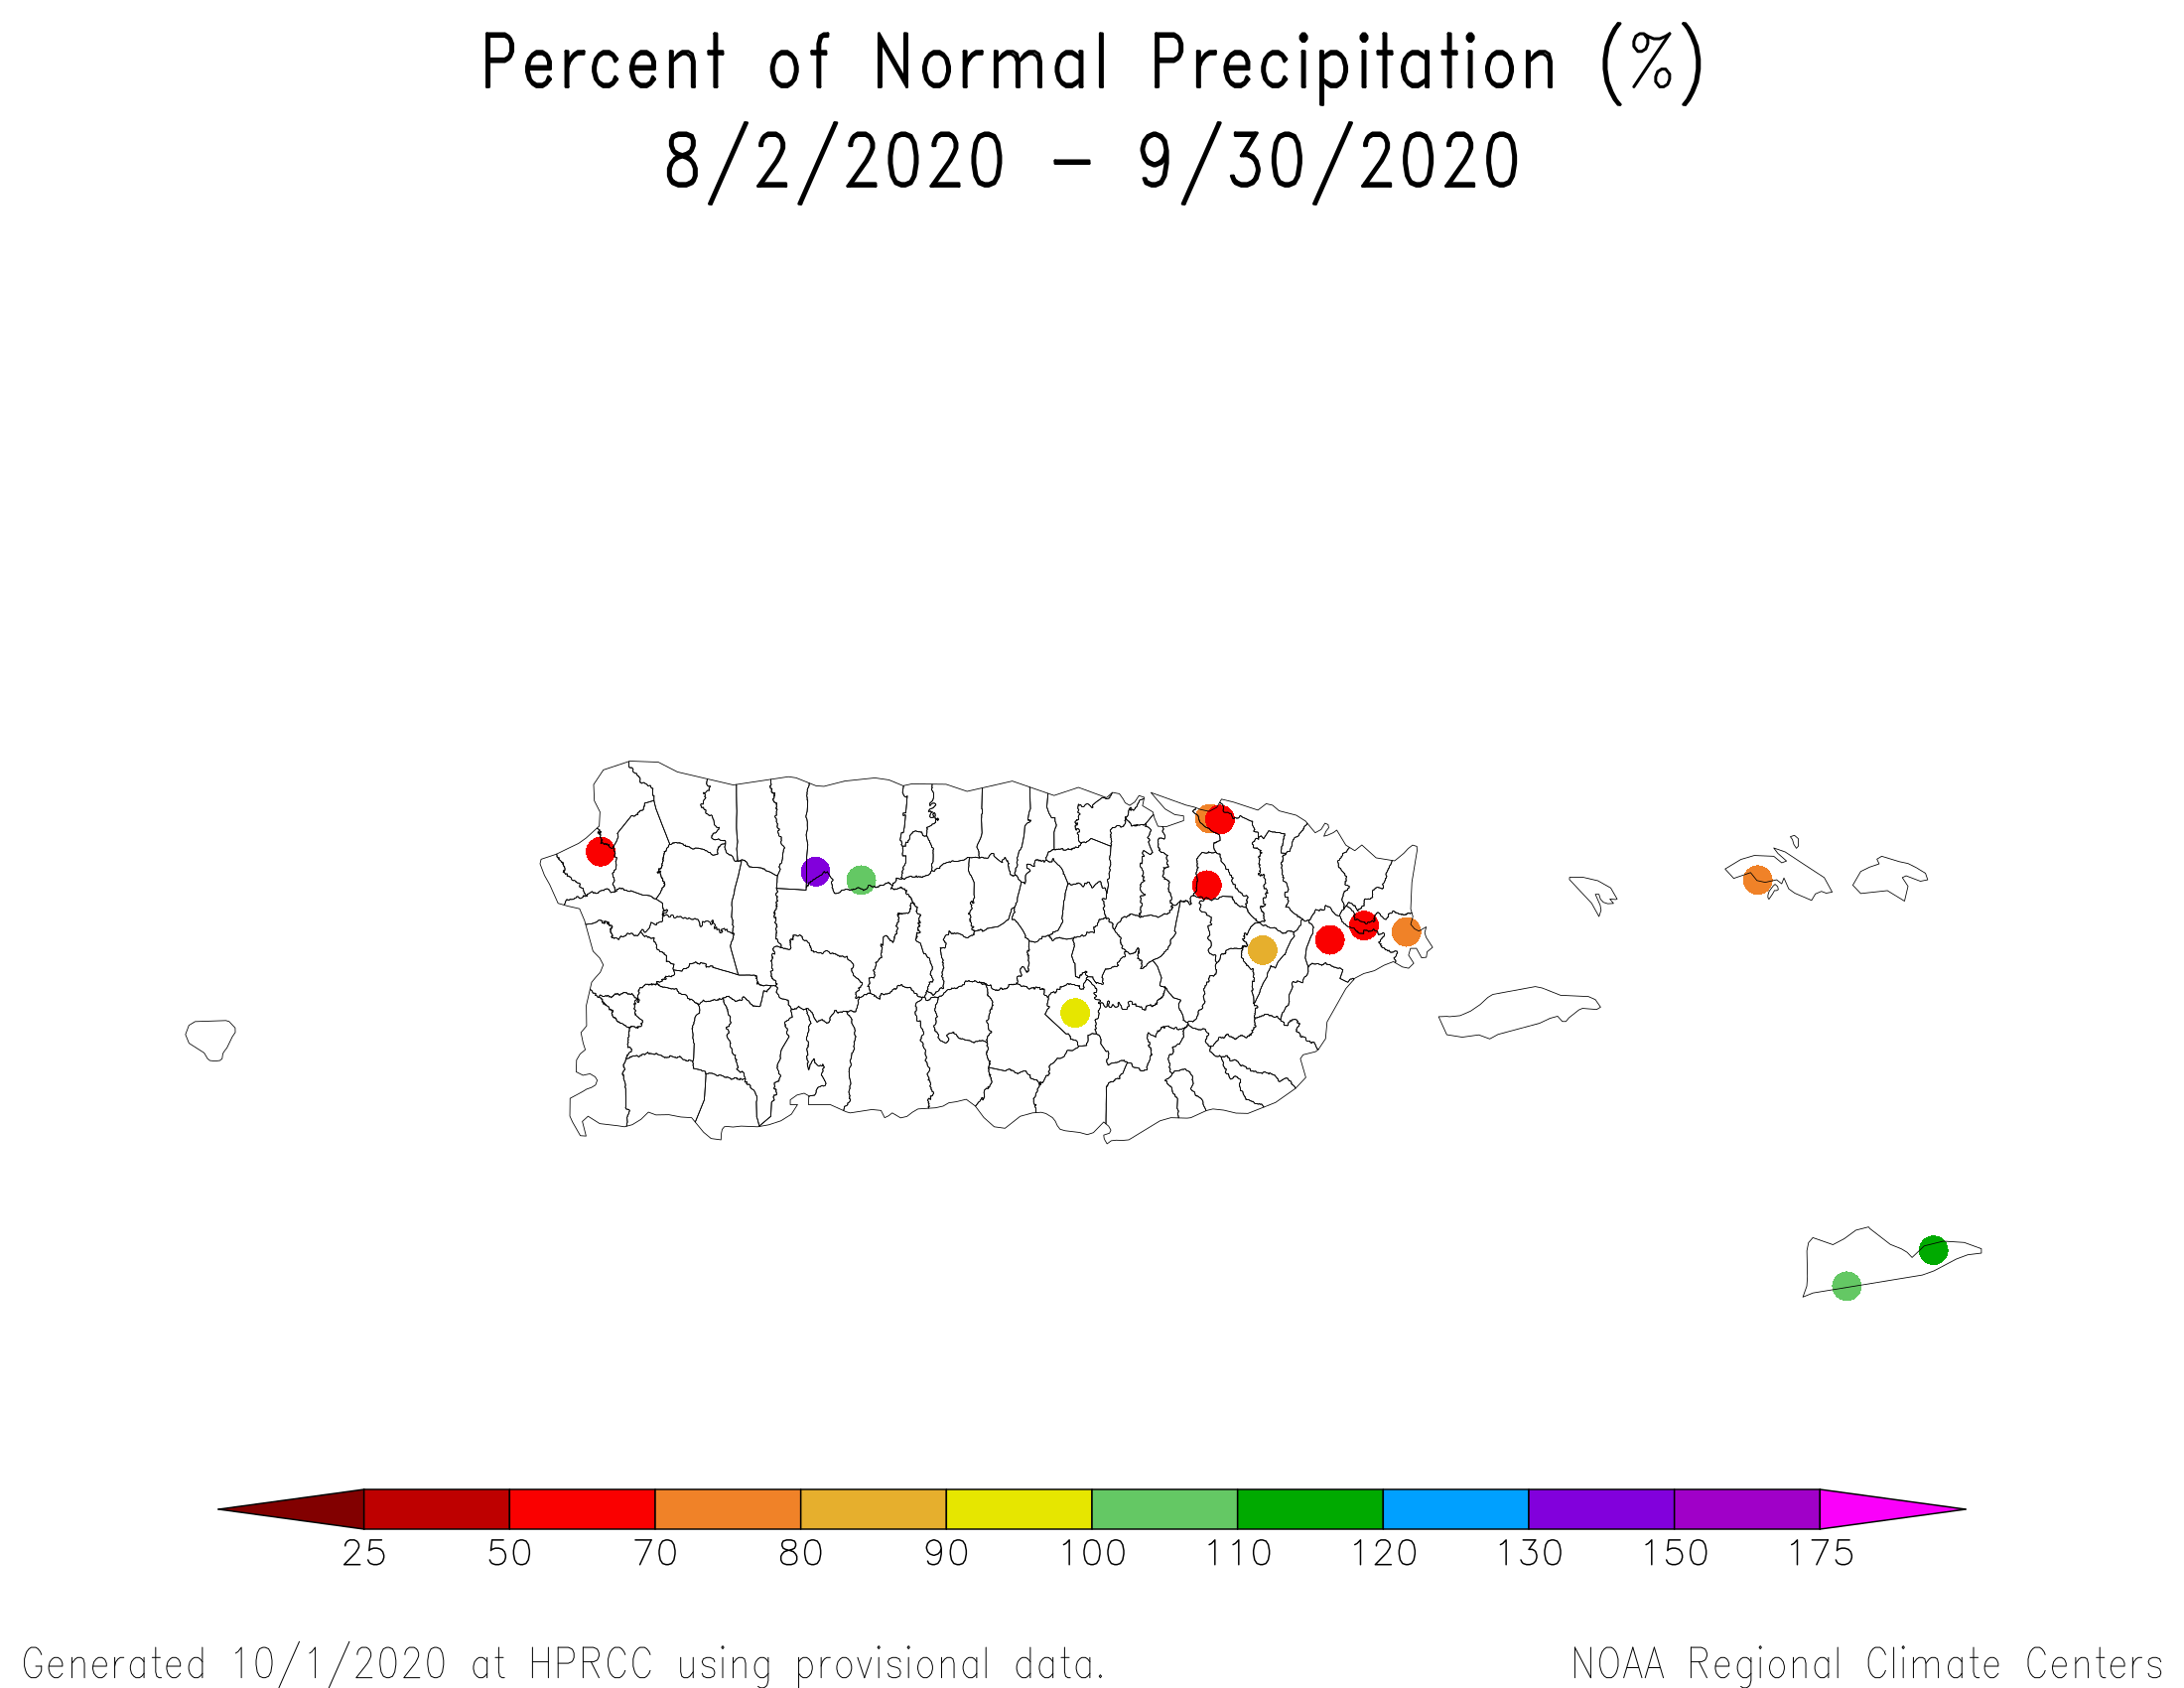 Puerto Rico and US Virgin Islands Percent of Normal Precipitation, August-September 2020